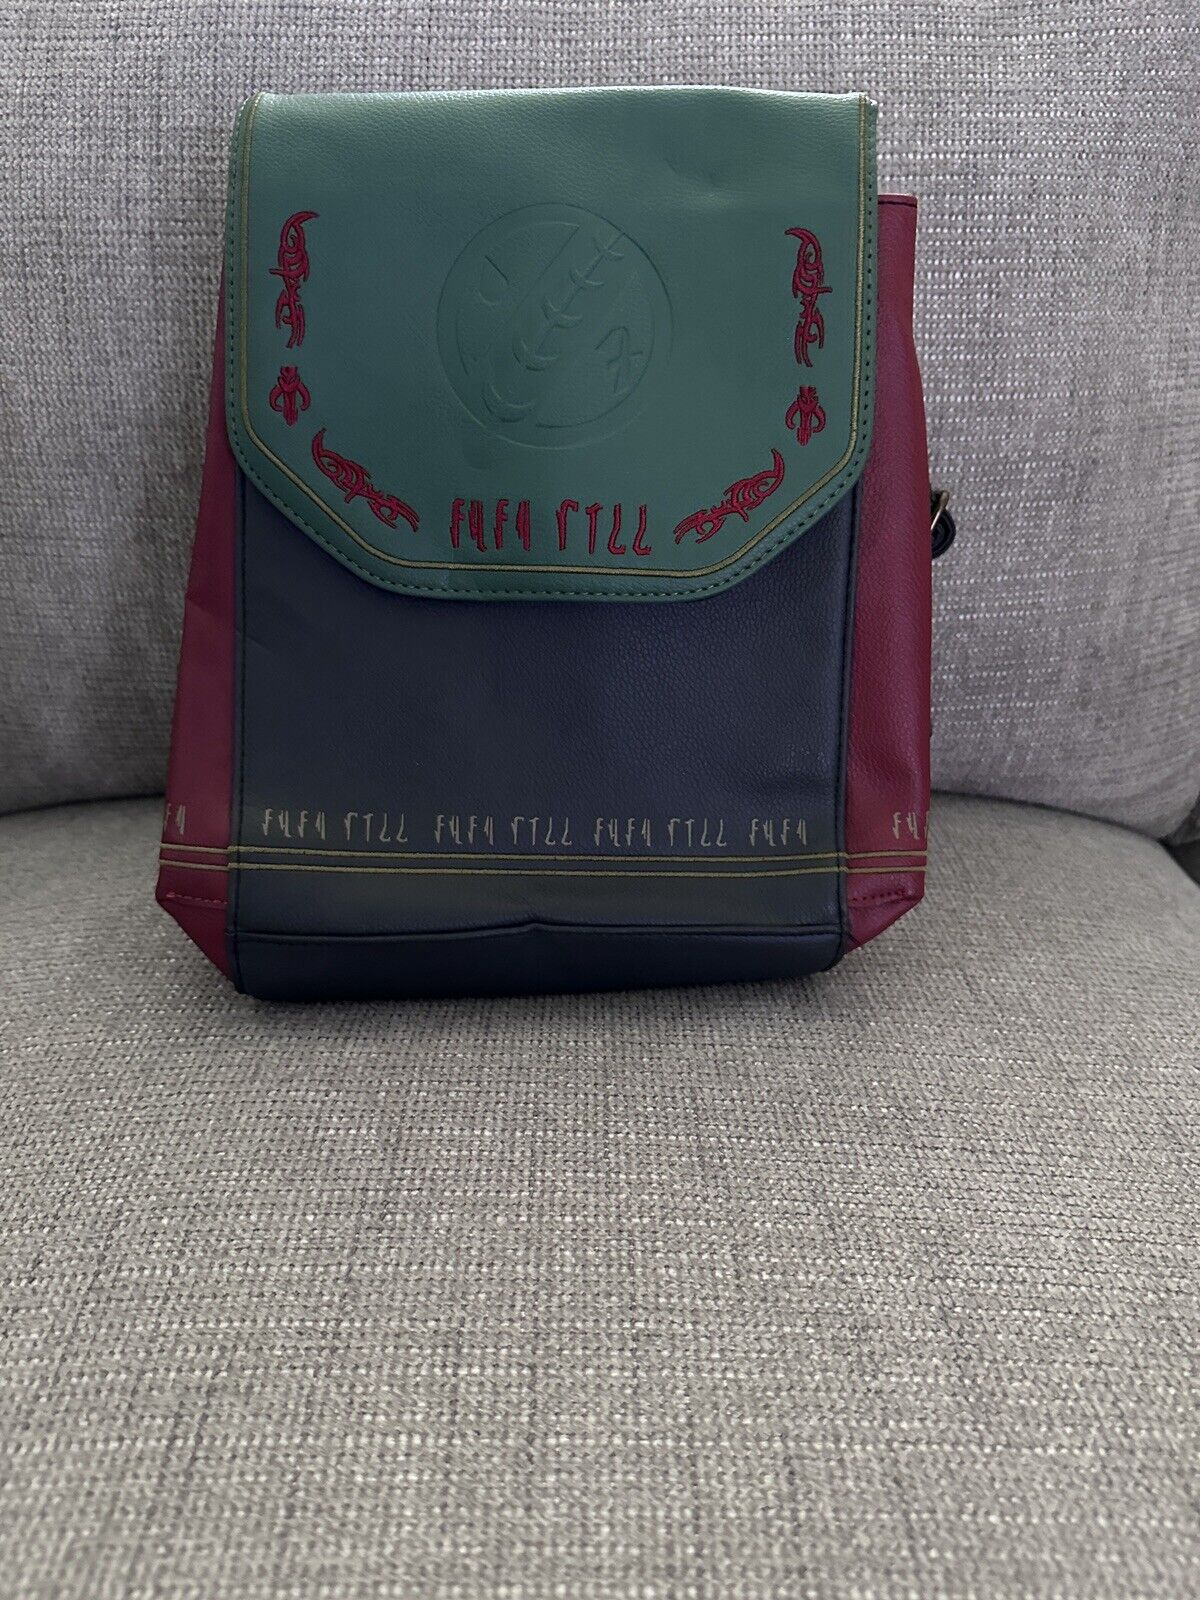 NEW Danielle Nicole Star Wars Boba Fett MINI Backpack Bag Embroidered Limited